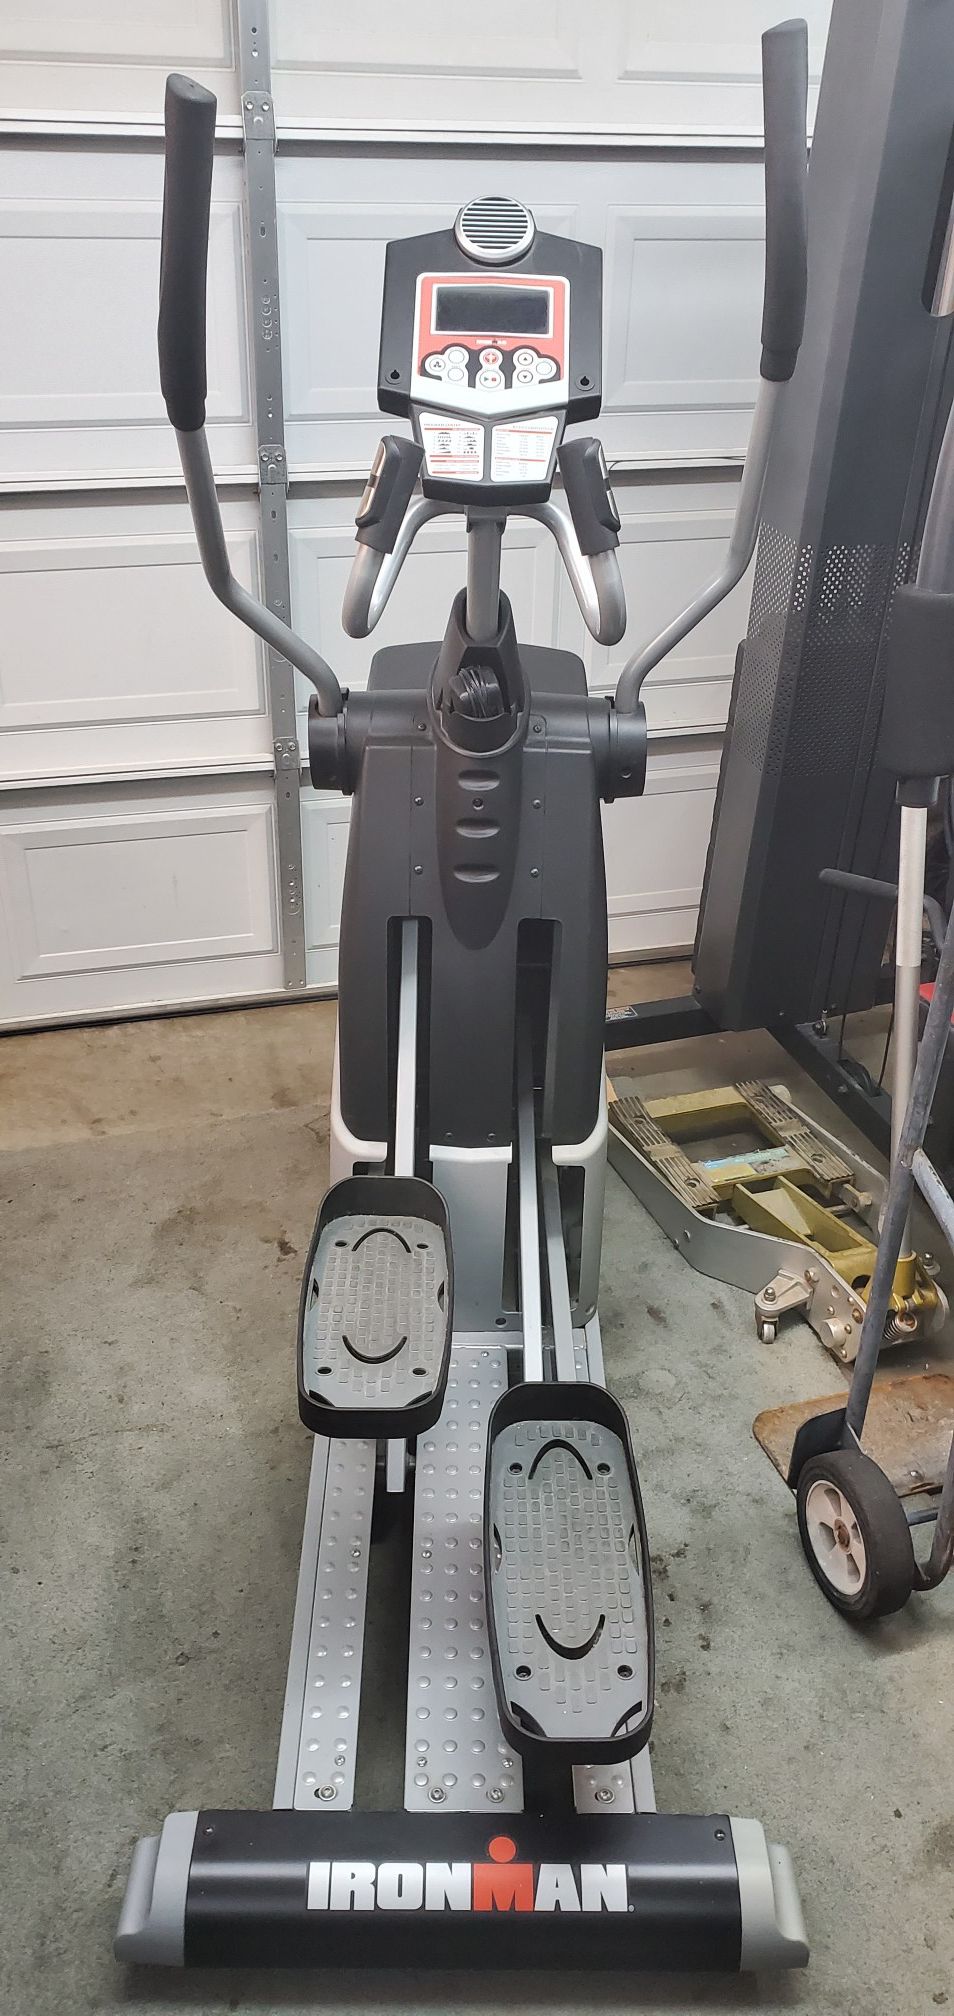 Ironman elliptical